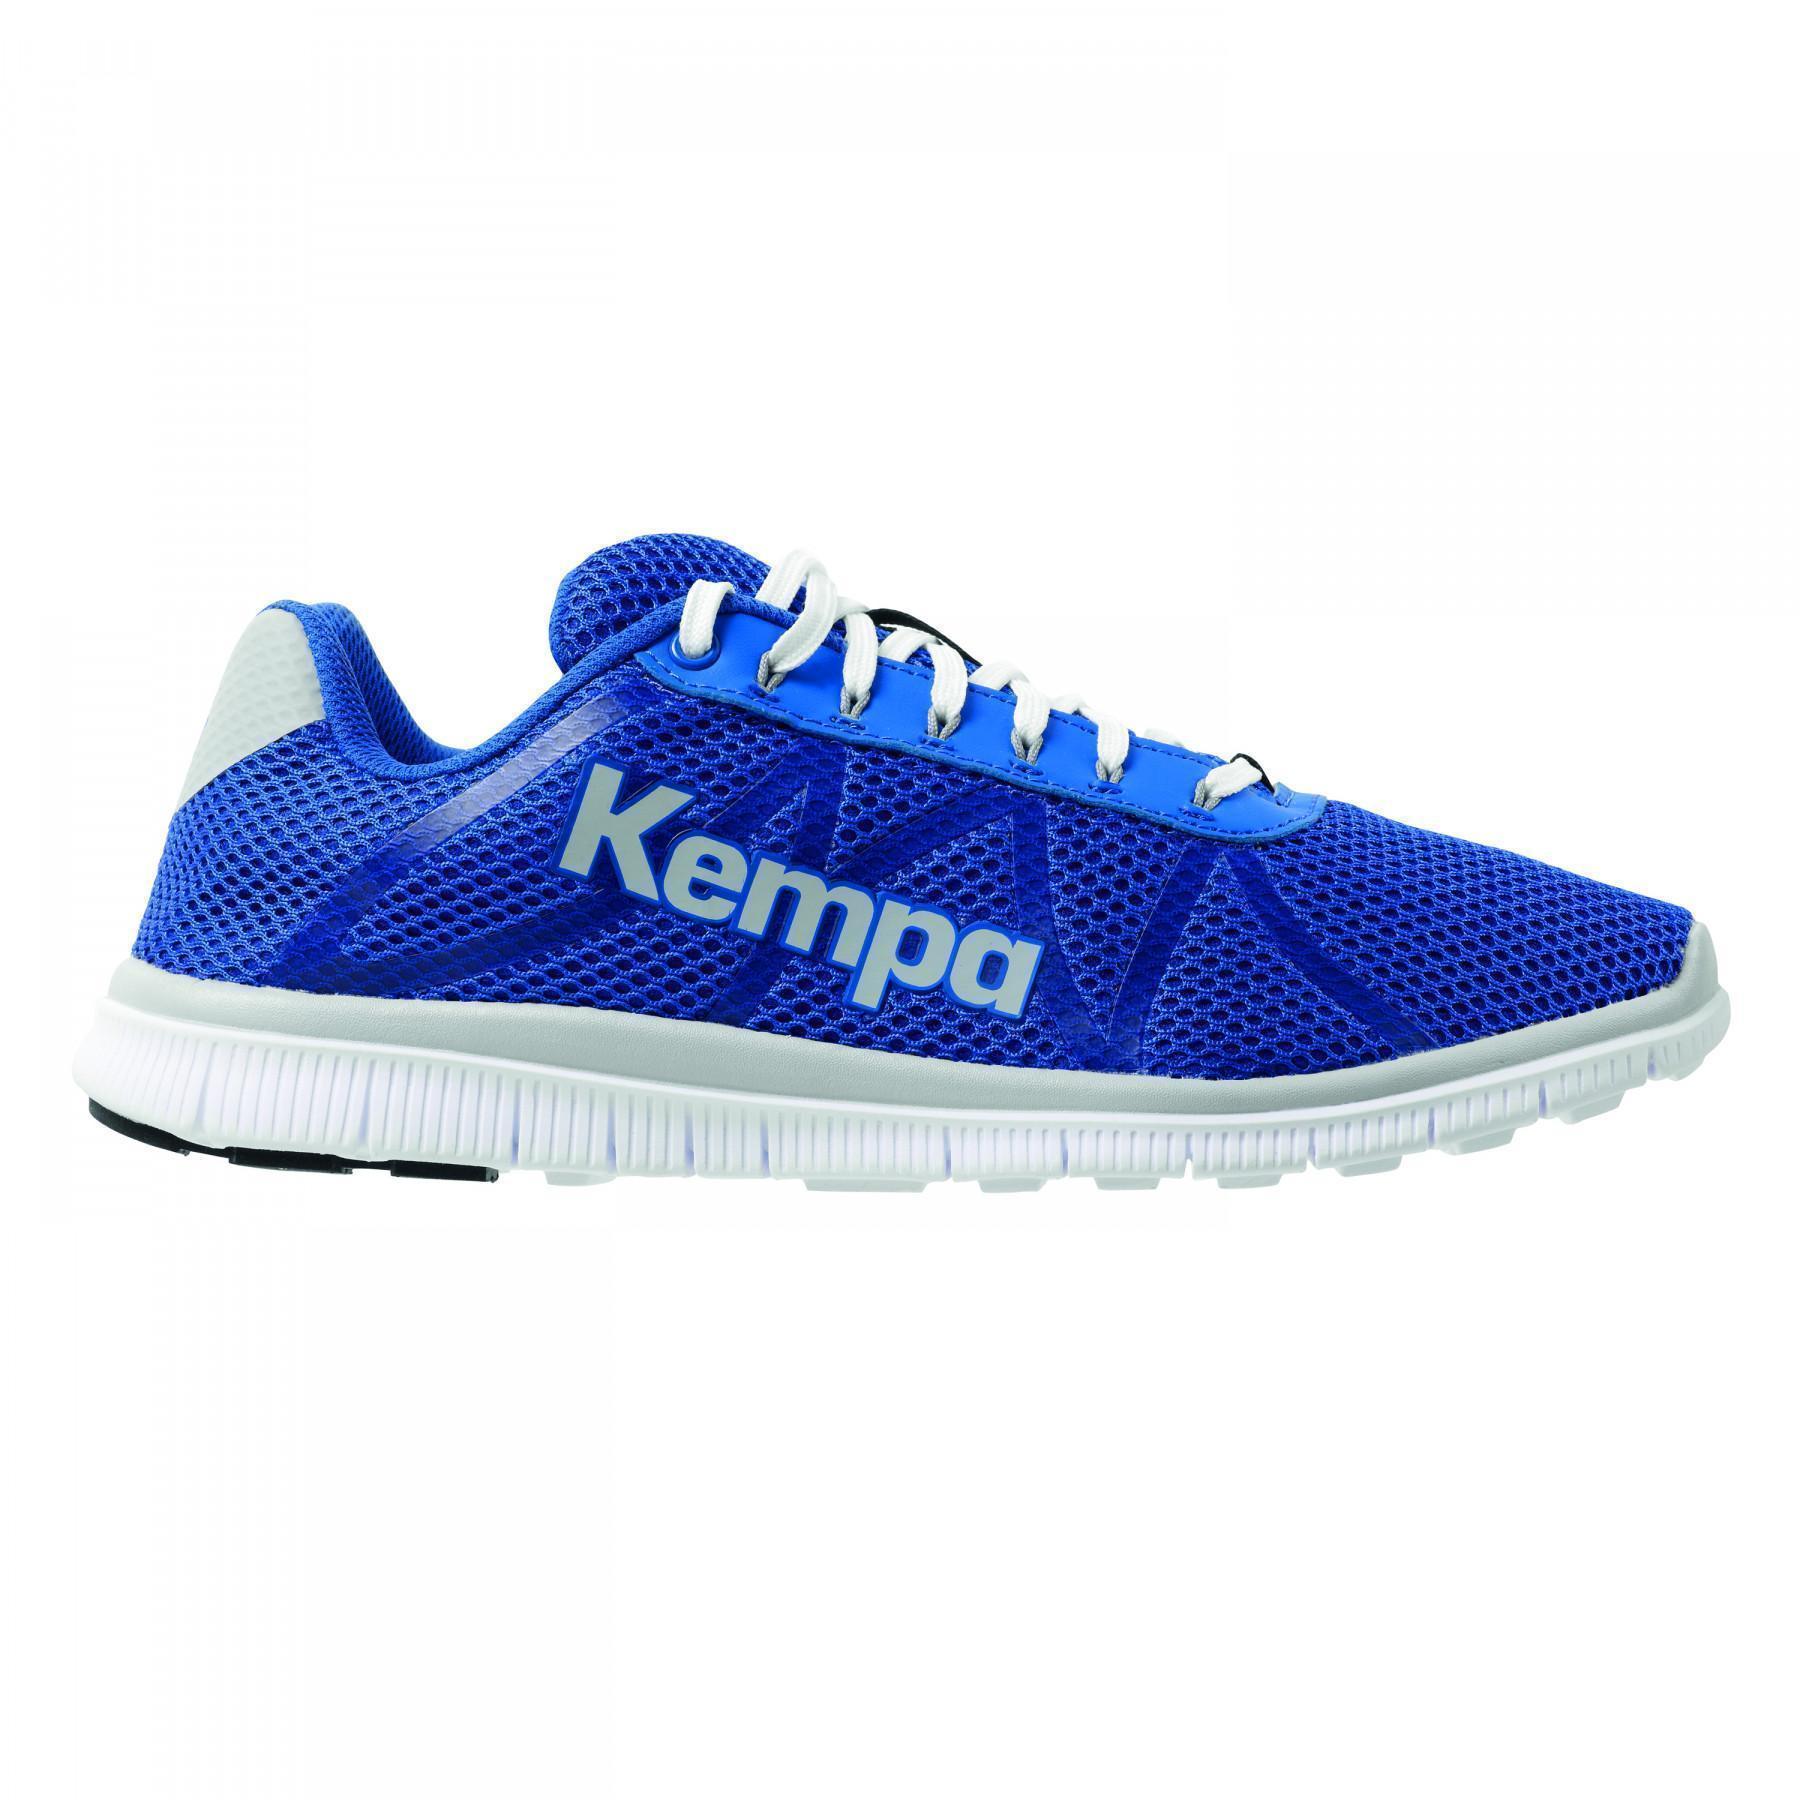 Shoes Kempa K-Float Bleu/gris